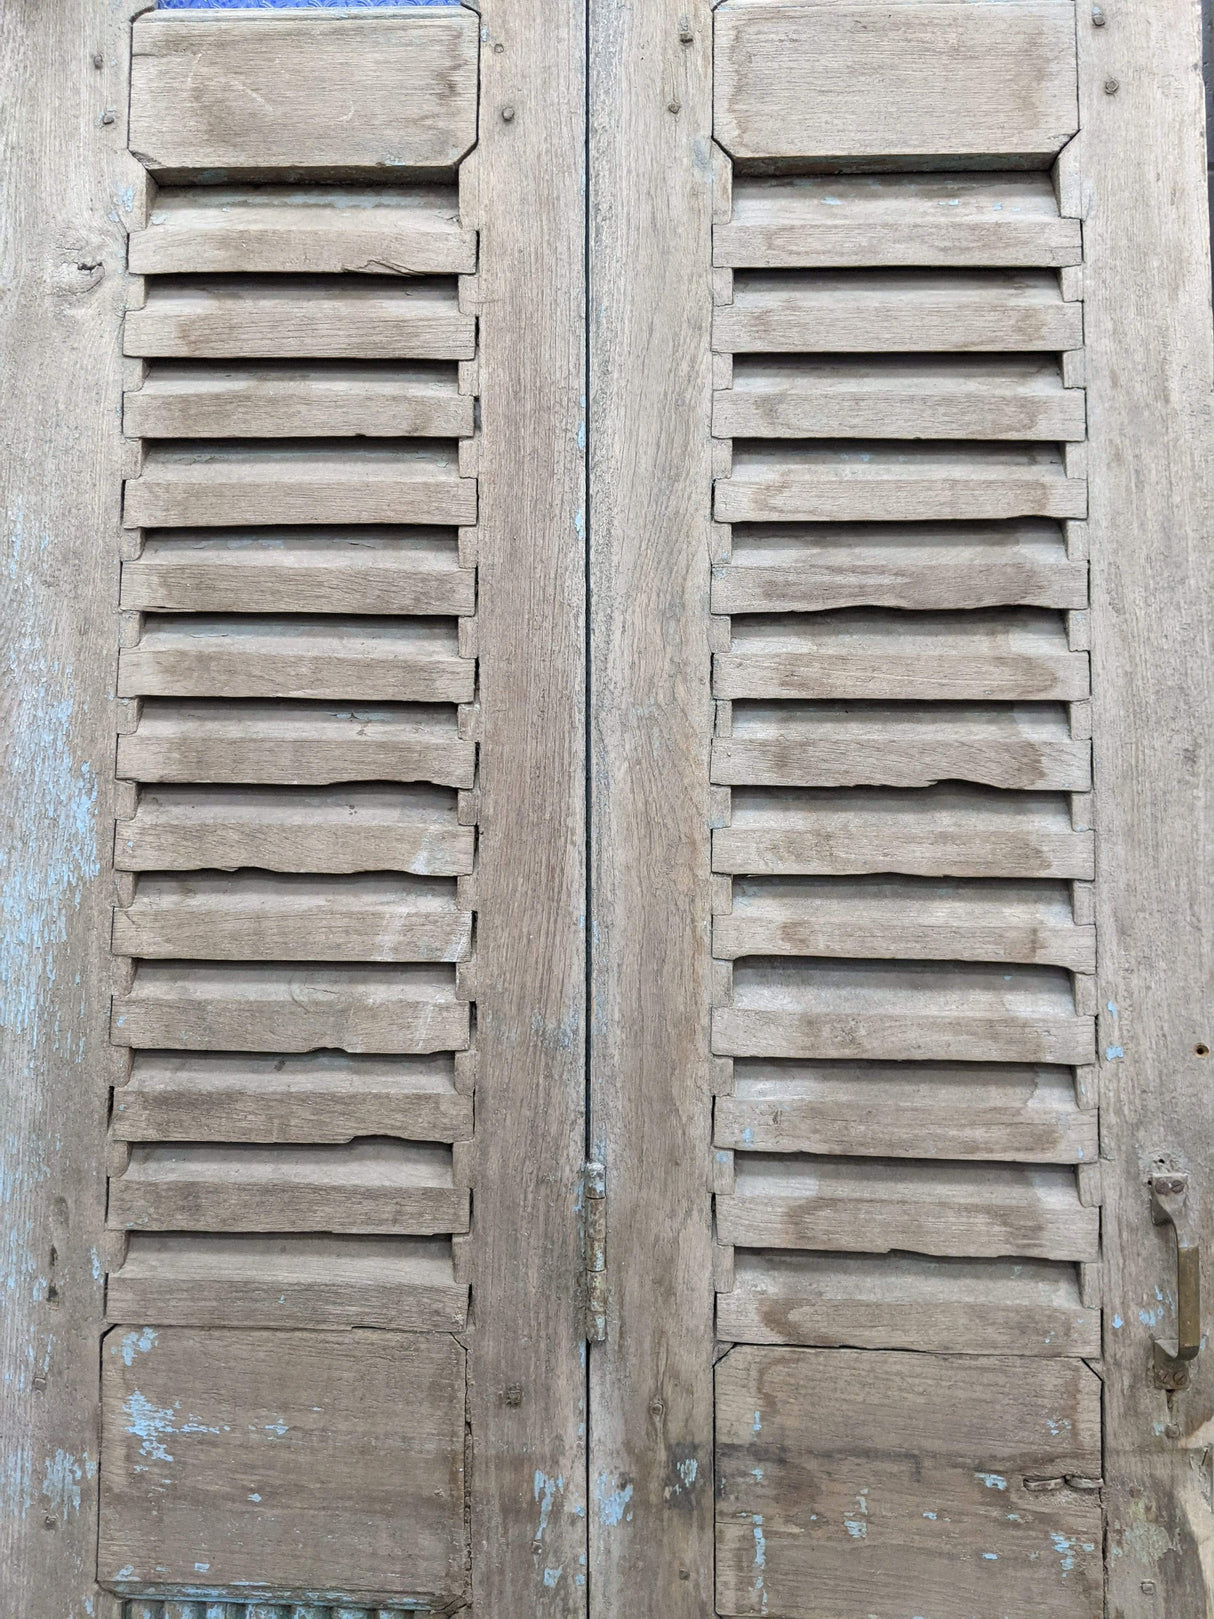 Rustic Set of Doors Curved Top